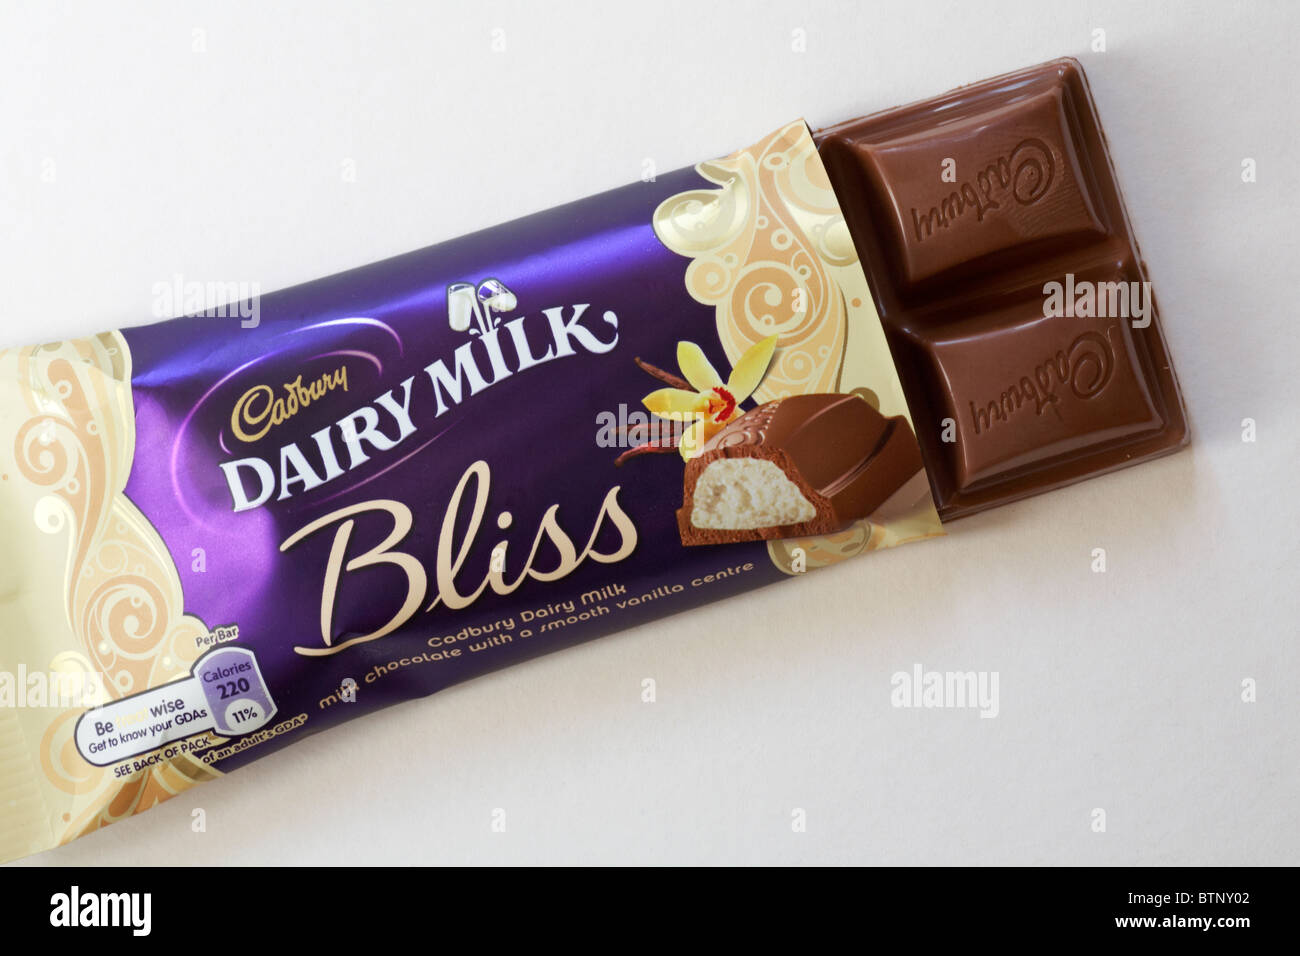 Opened bar of Cadbury Dairy Milk Bliss chocolate set on white background Stock Photo